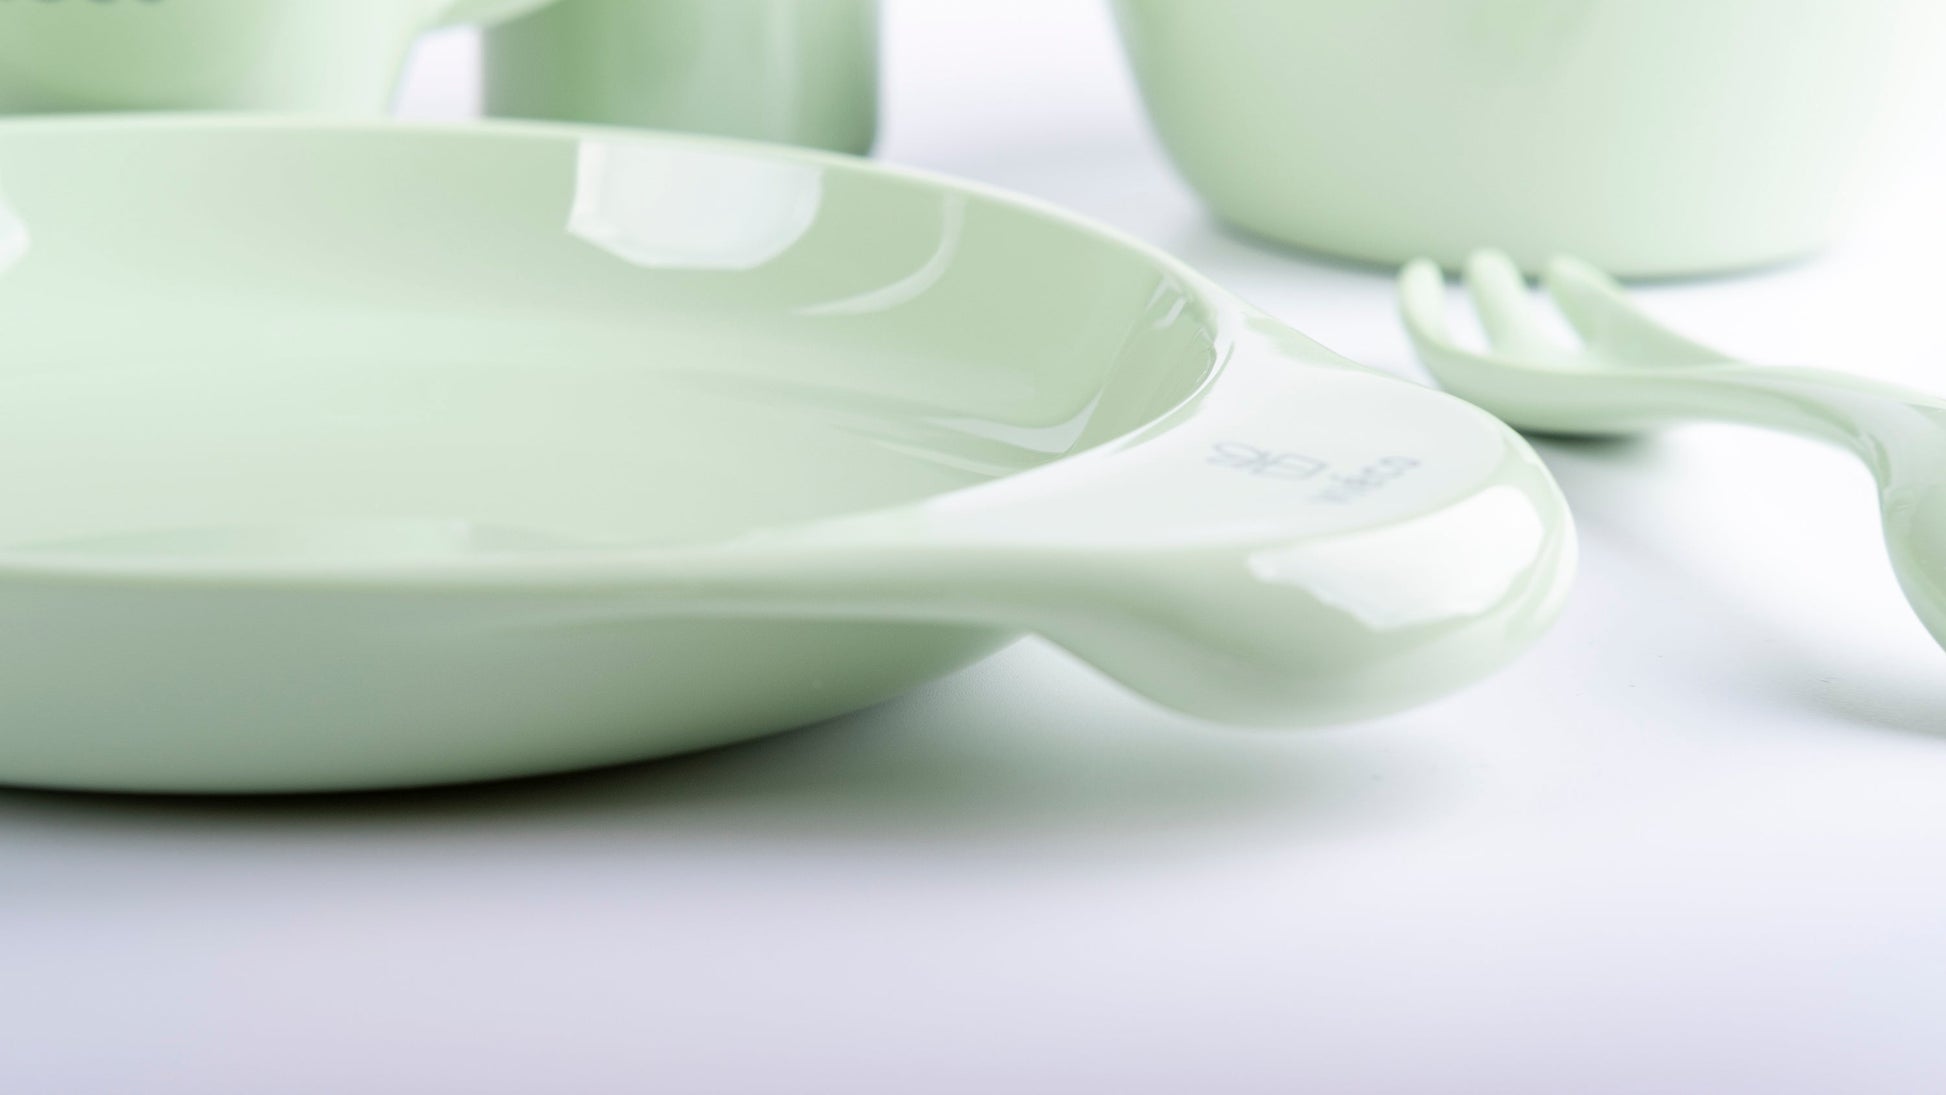 Viéco eco-friendly dinner plates and plates - starcopia design store